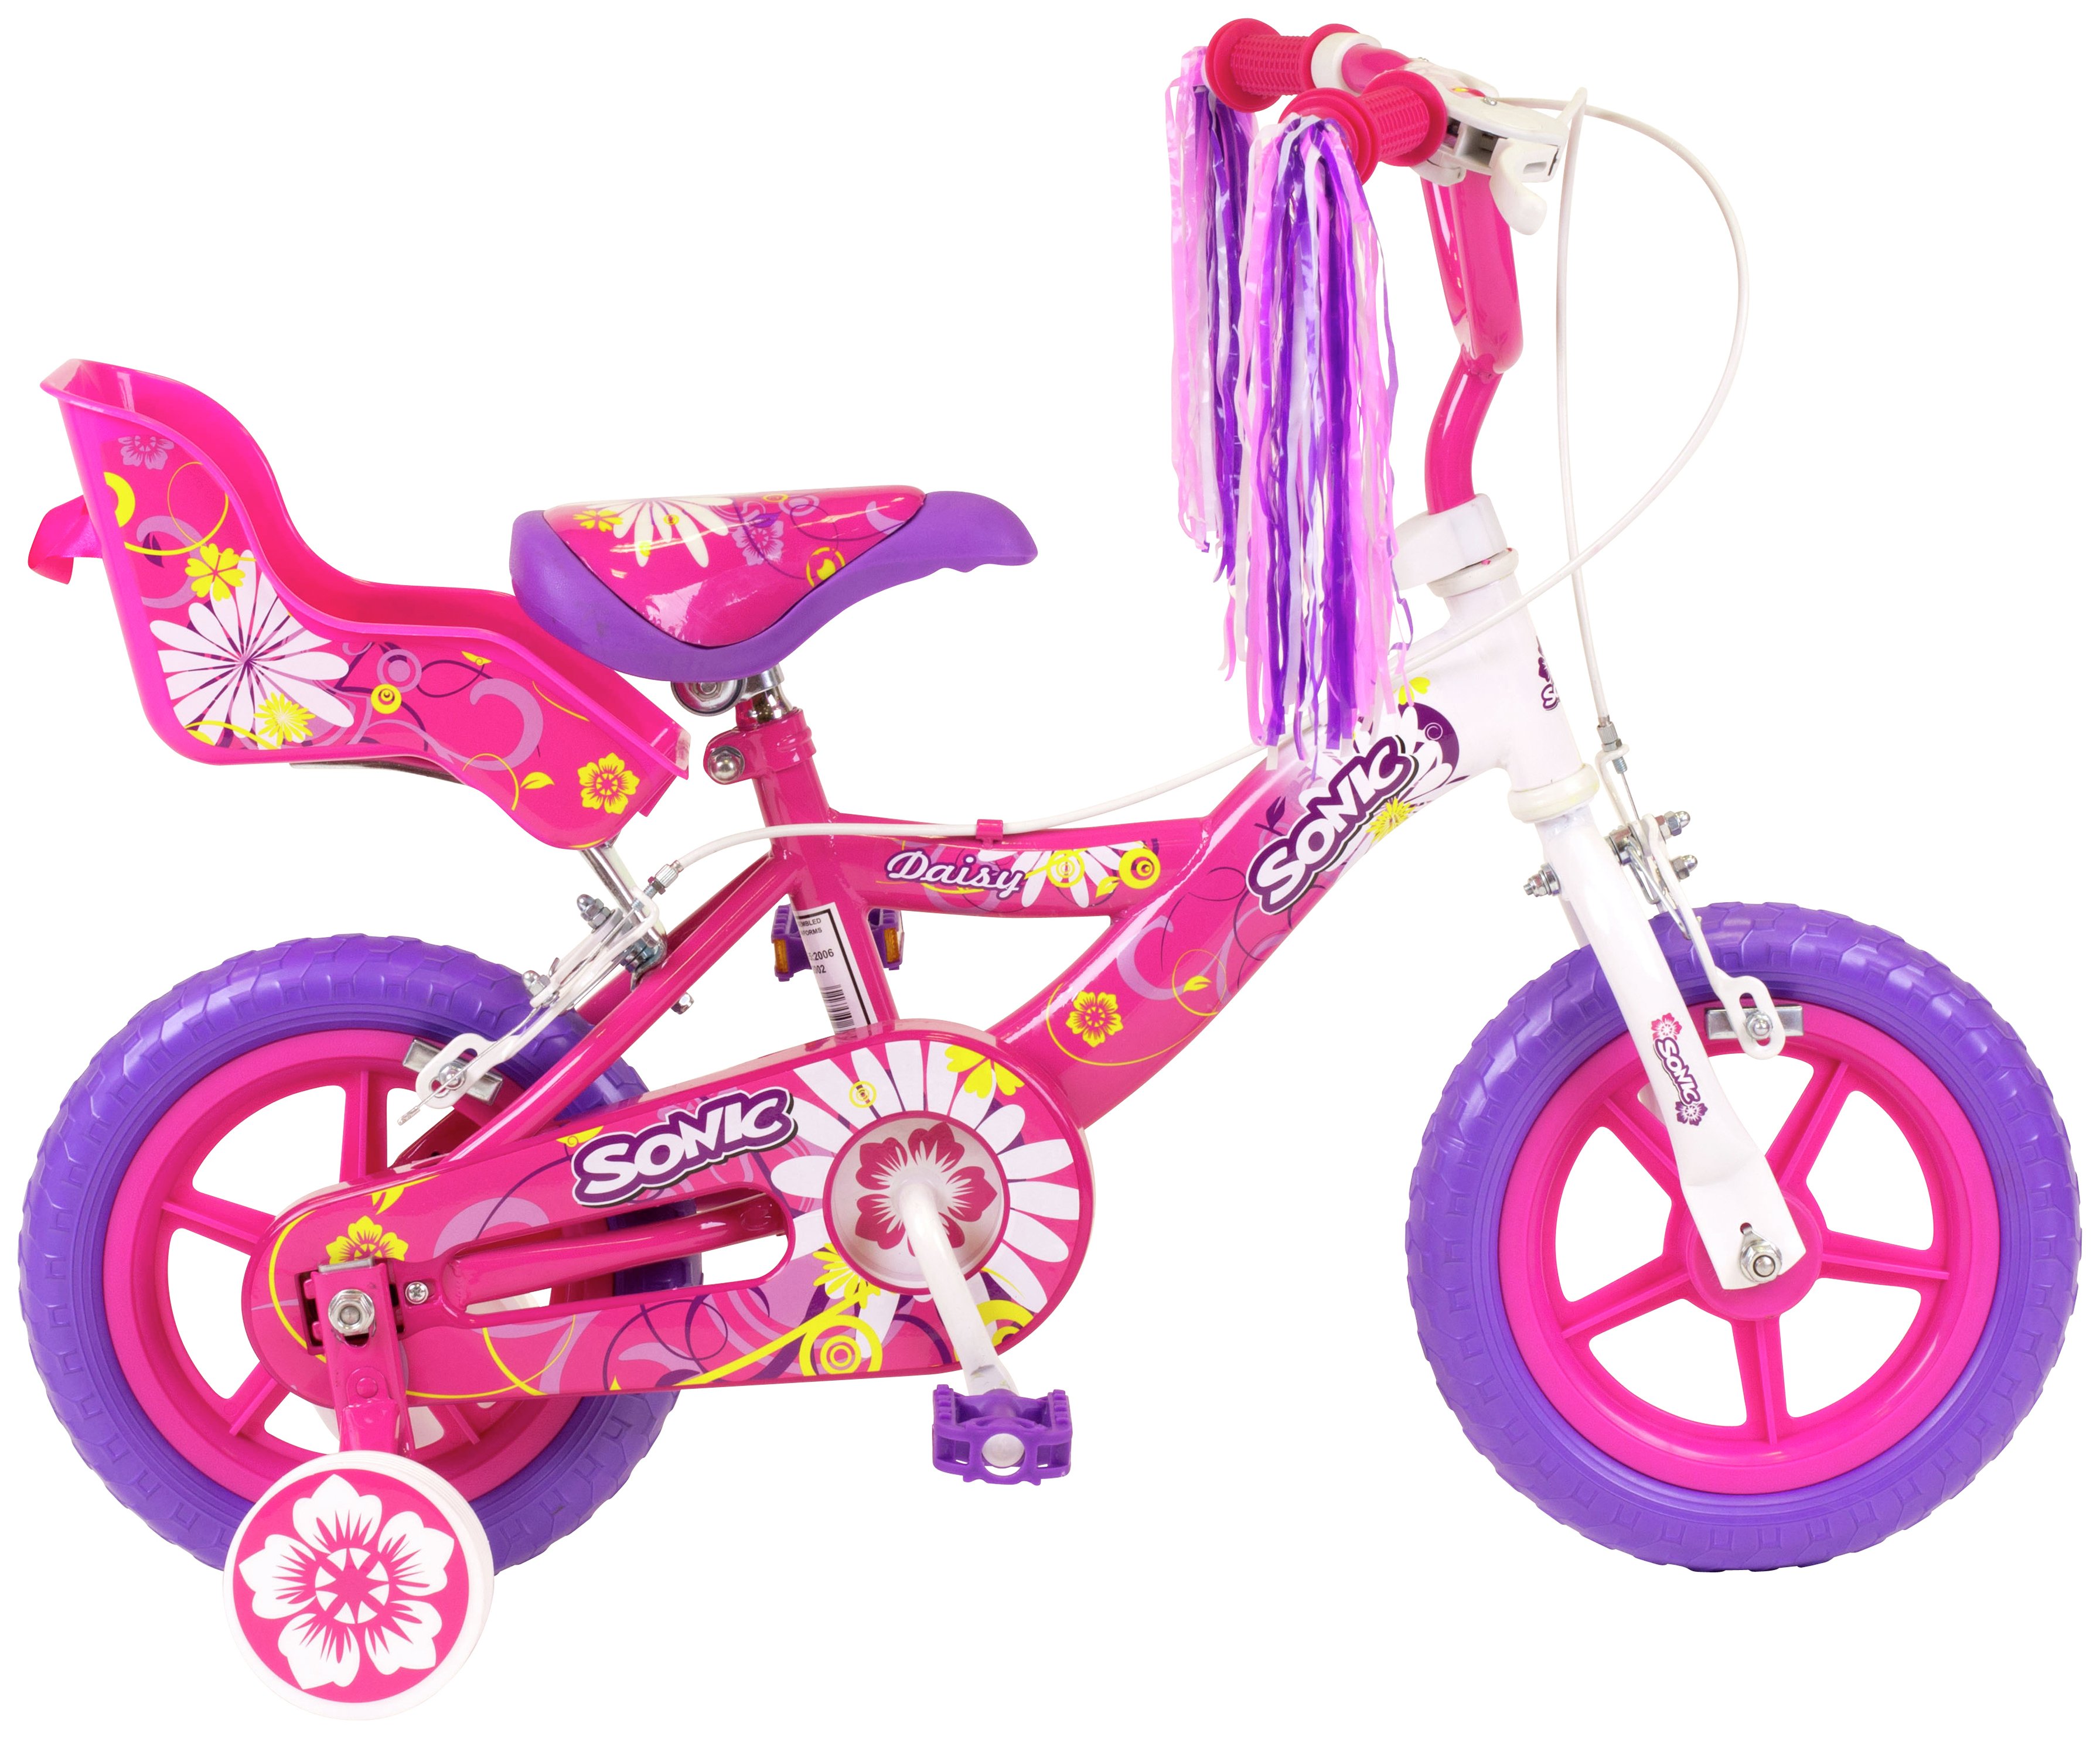 Sonic Daisy 12 Inch Kids Bike